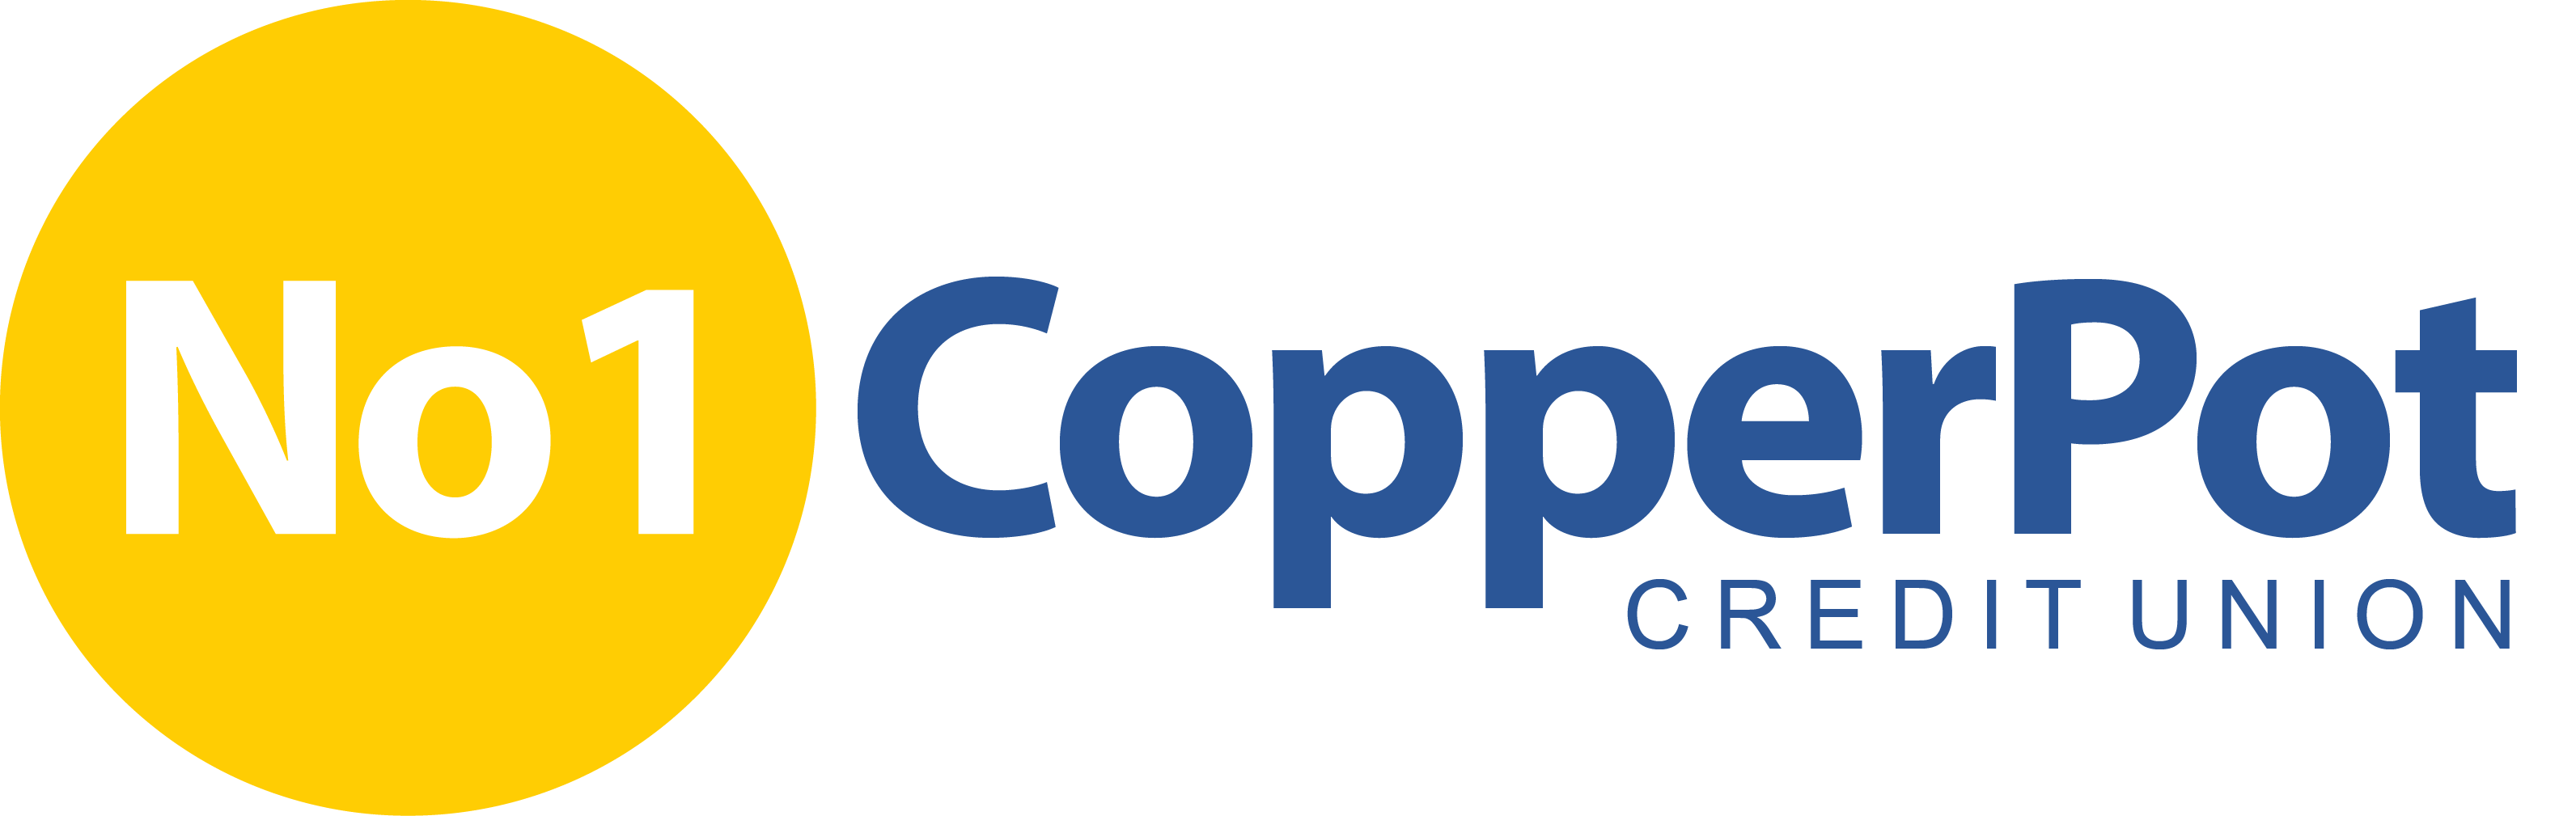 No1 Copperpot Credit Union